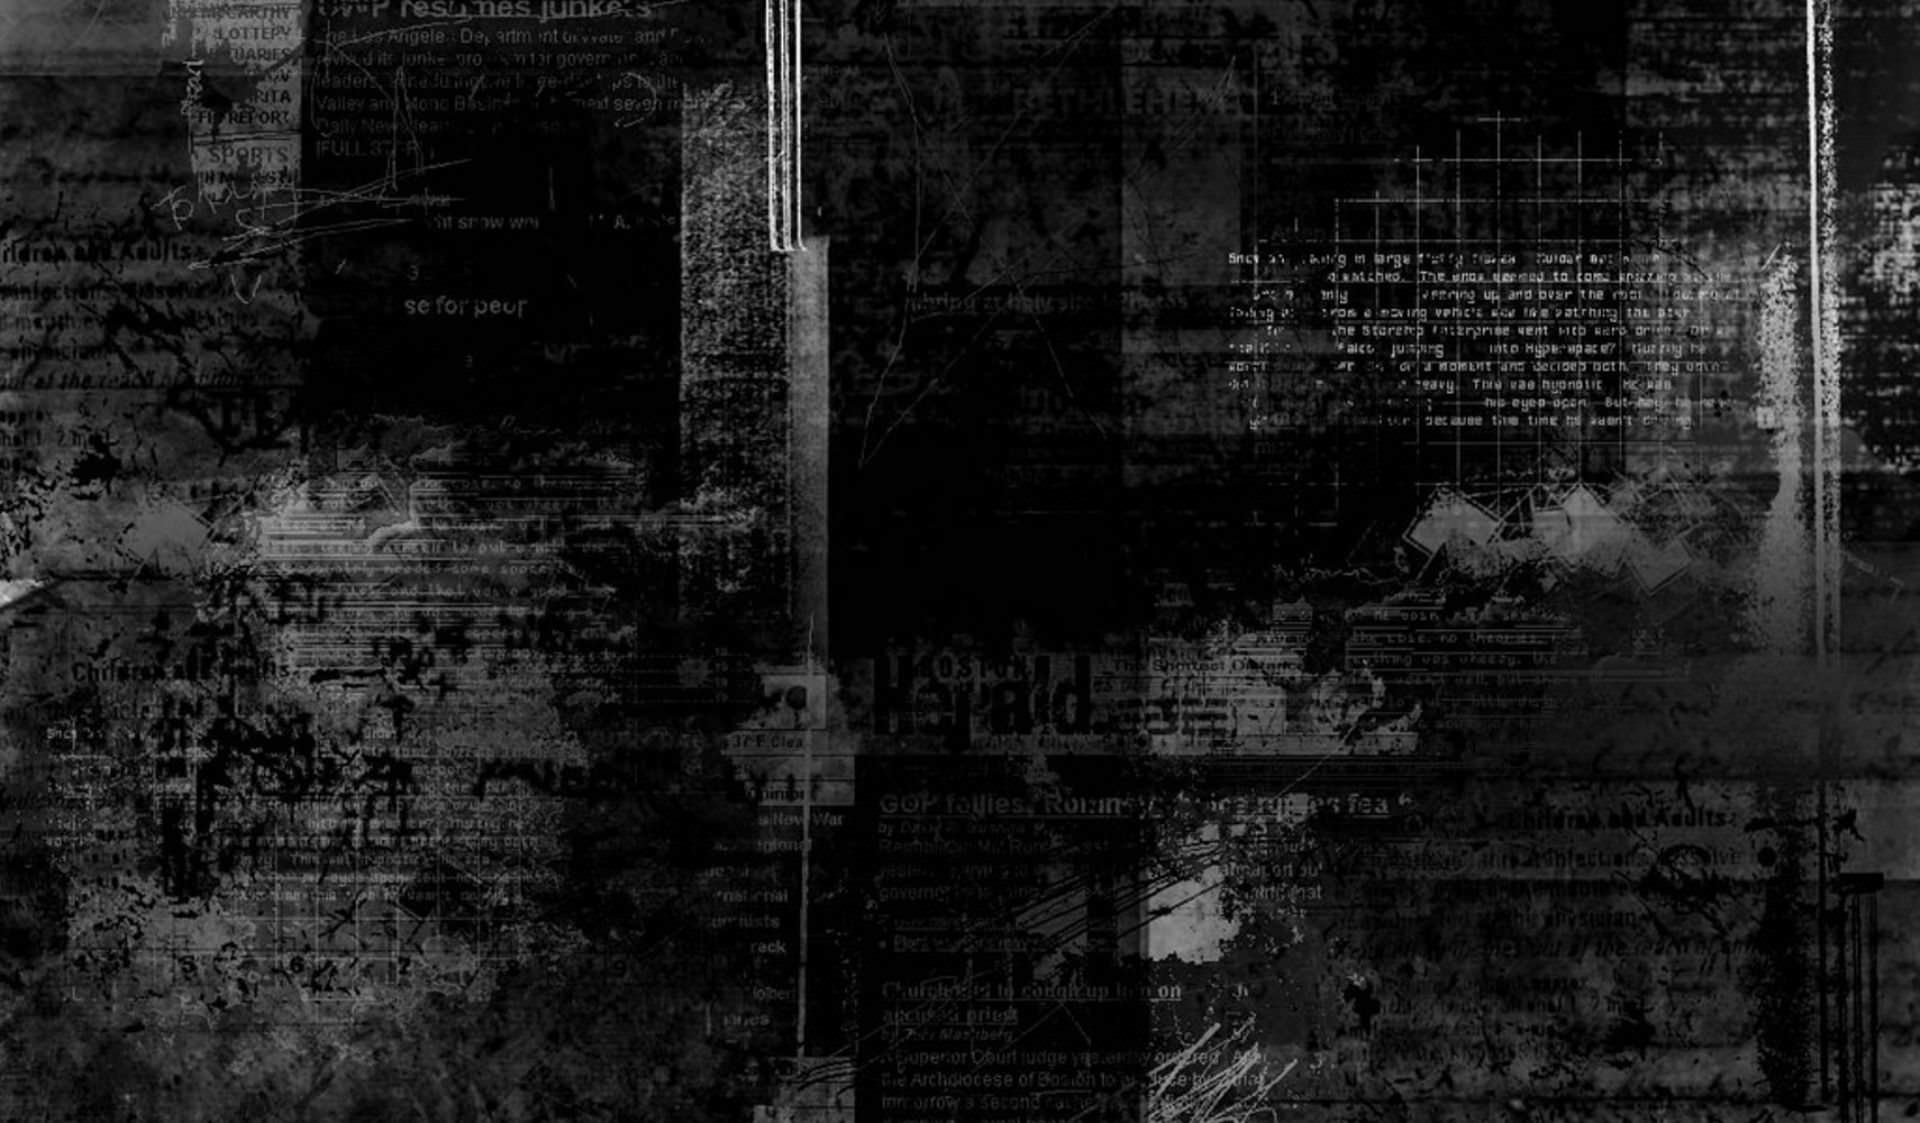 fondo de pantalla abstracto oscuro,negro,en blanco y negro,monocromo,texto,fotografía monocroma